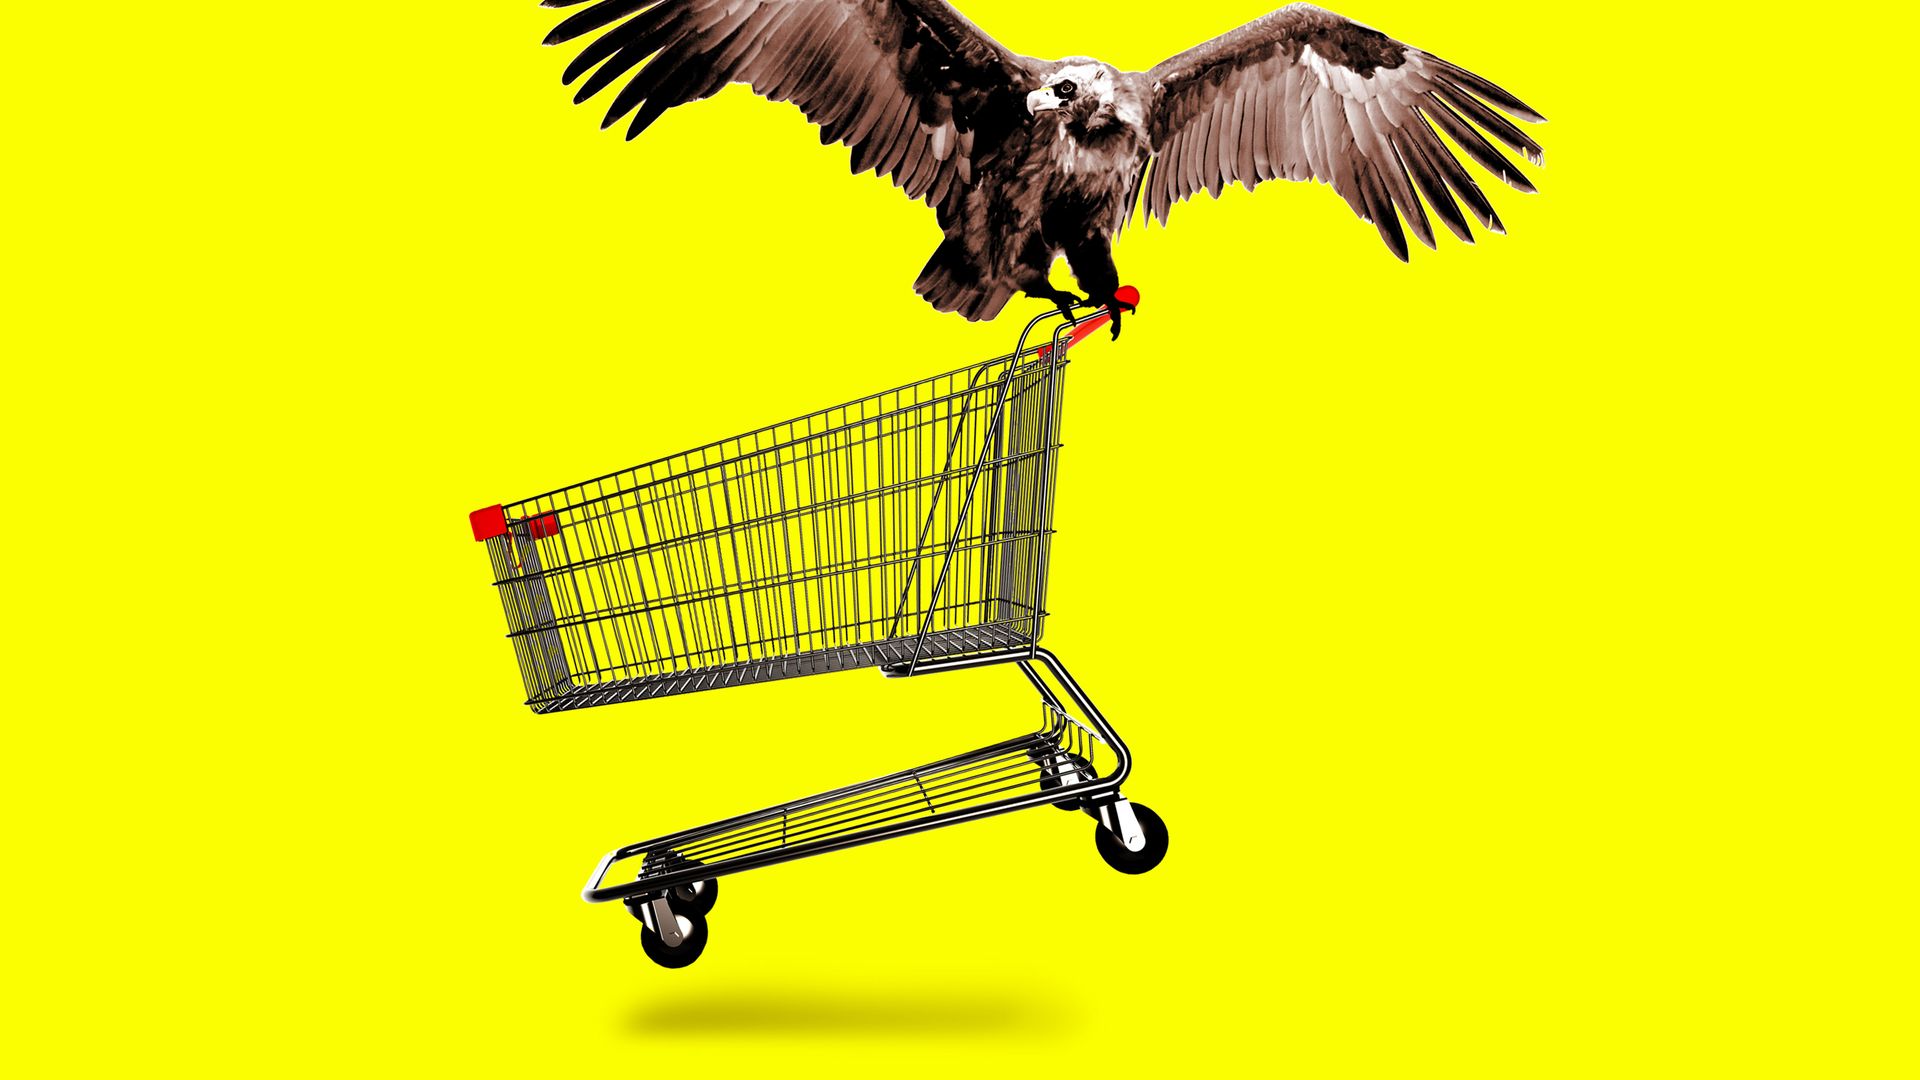 Vulture carrying away a shopping cart